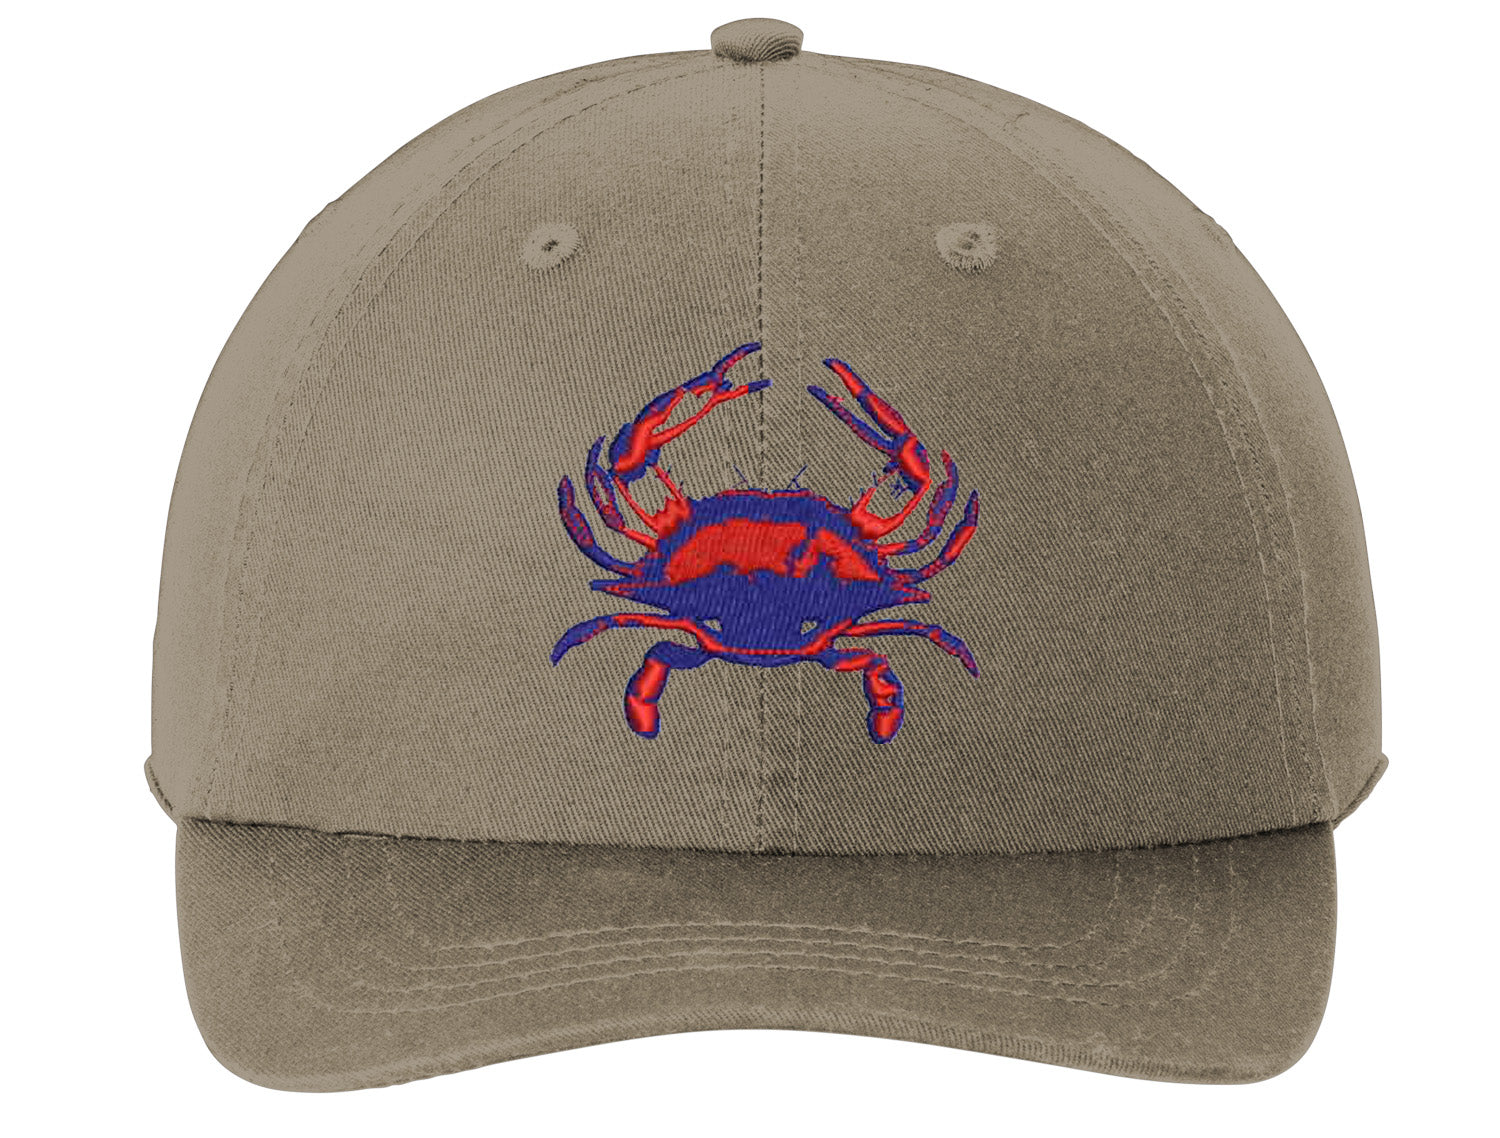 Blue Crab "Reel Crabby" Hat - Khaki Unstructured Dad Hat